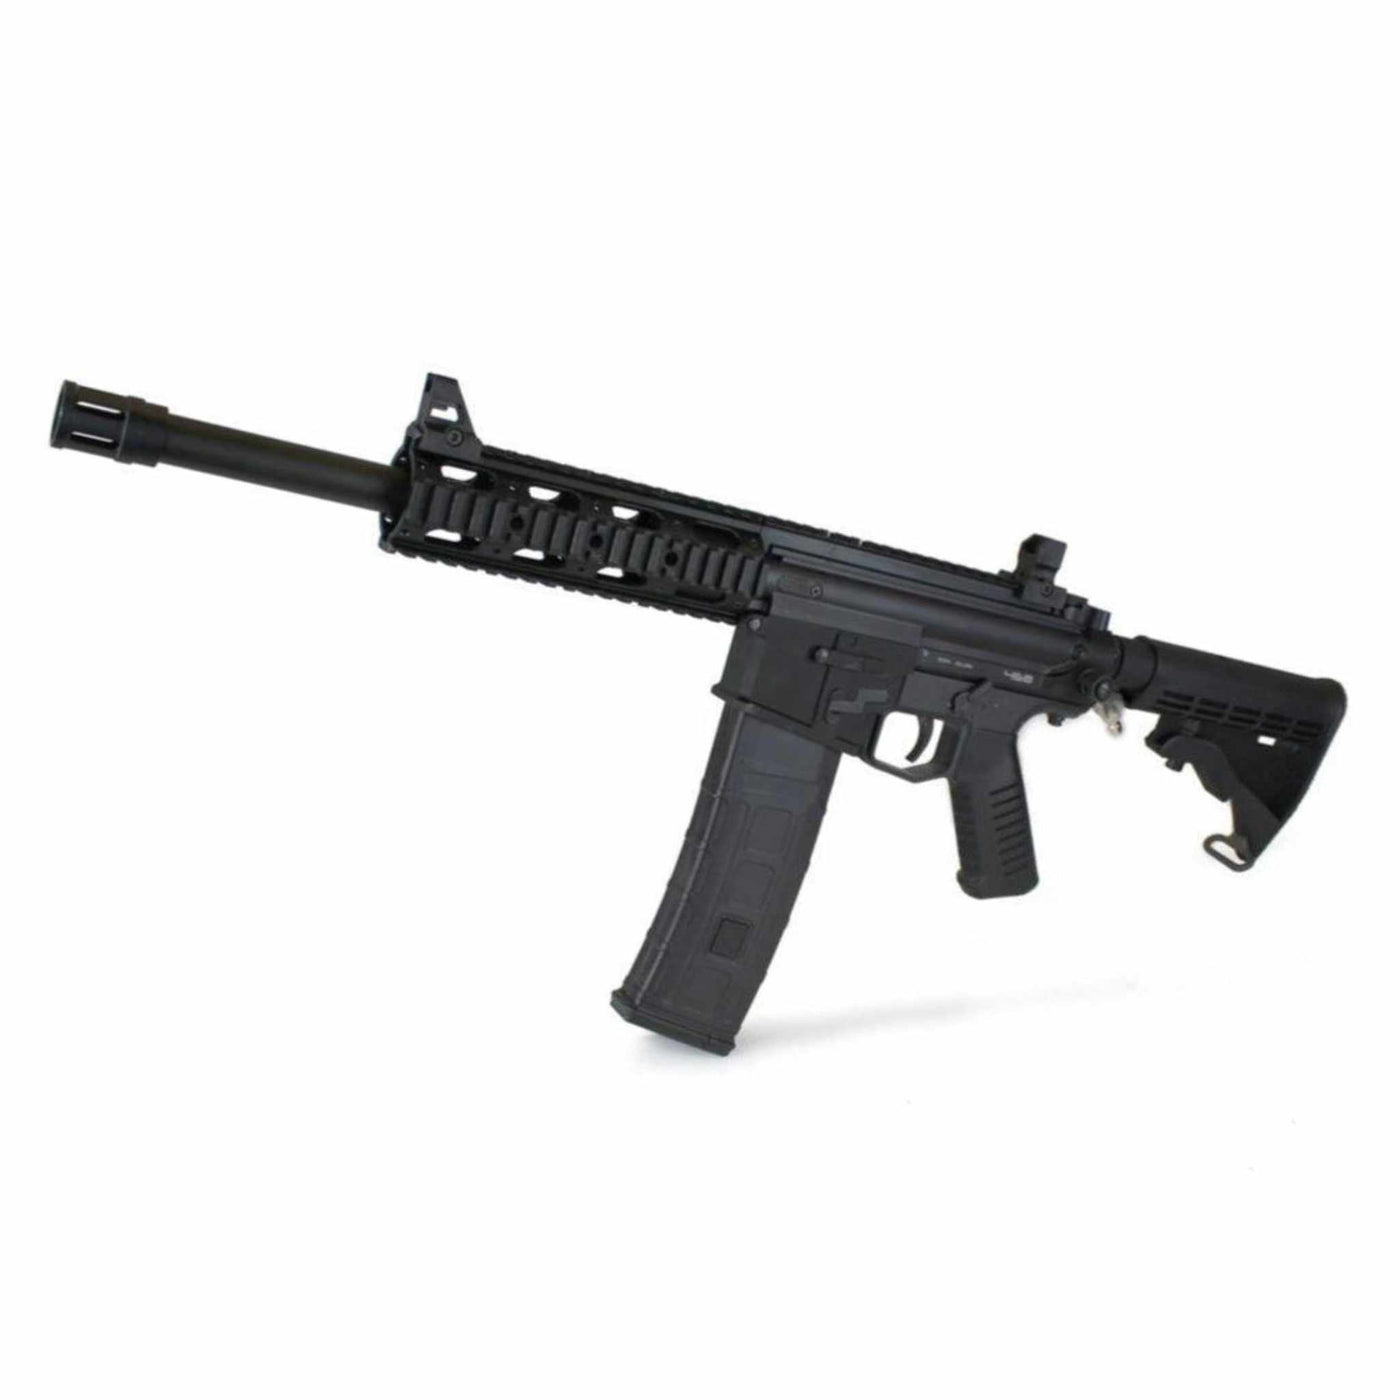 RAP4 Frostbite Sniper Paintball Gun – MCS